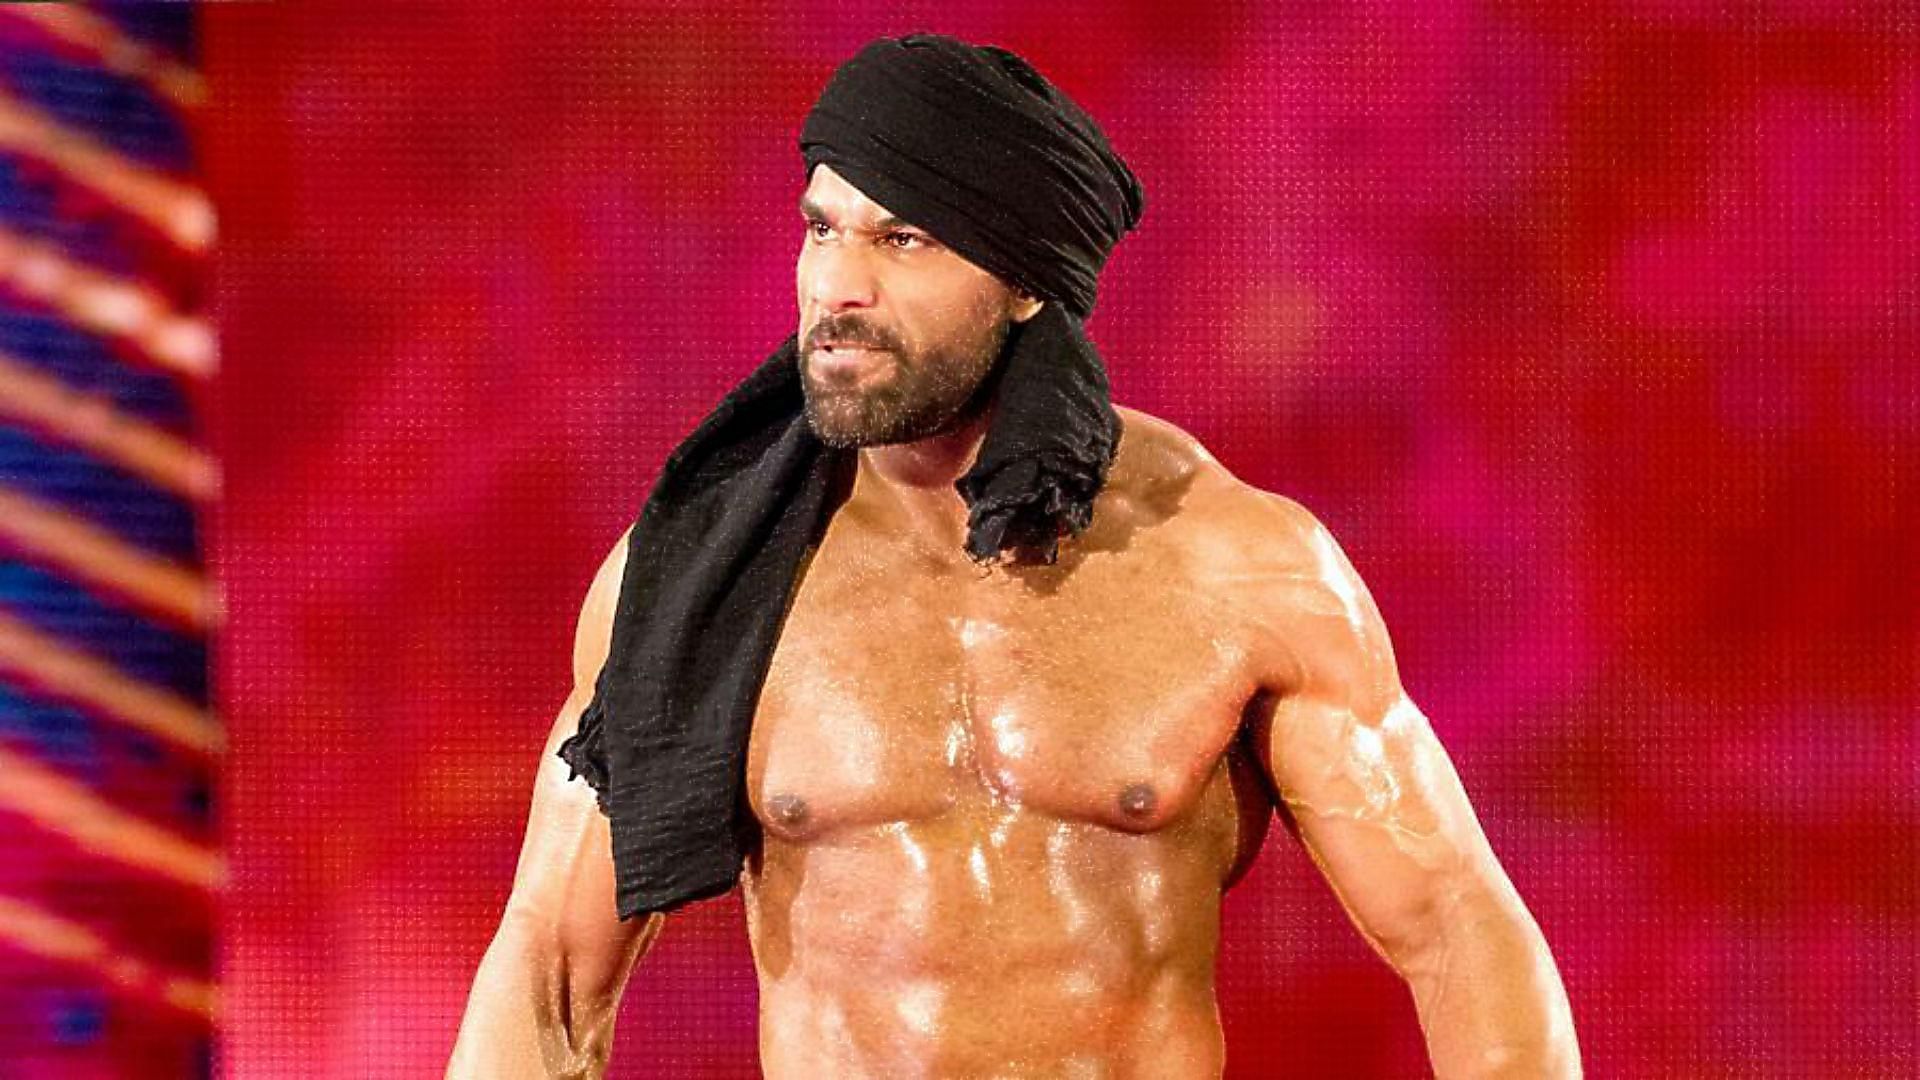 Jinder Mahal made a surprise return to WWE NXT